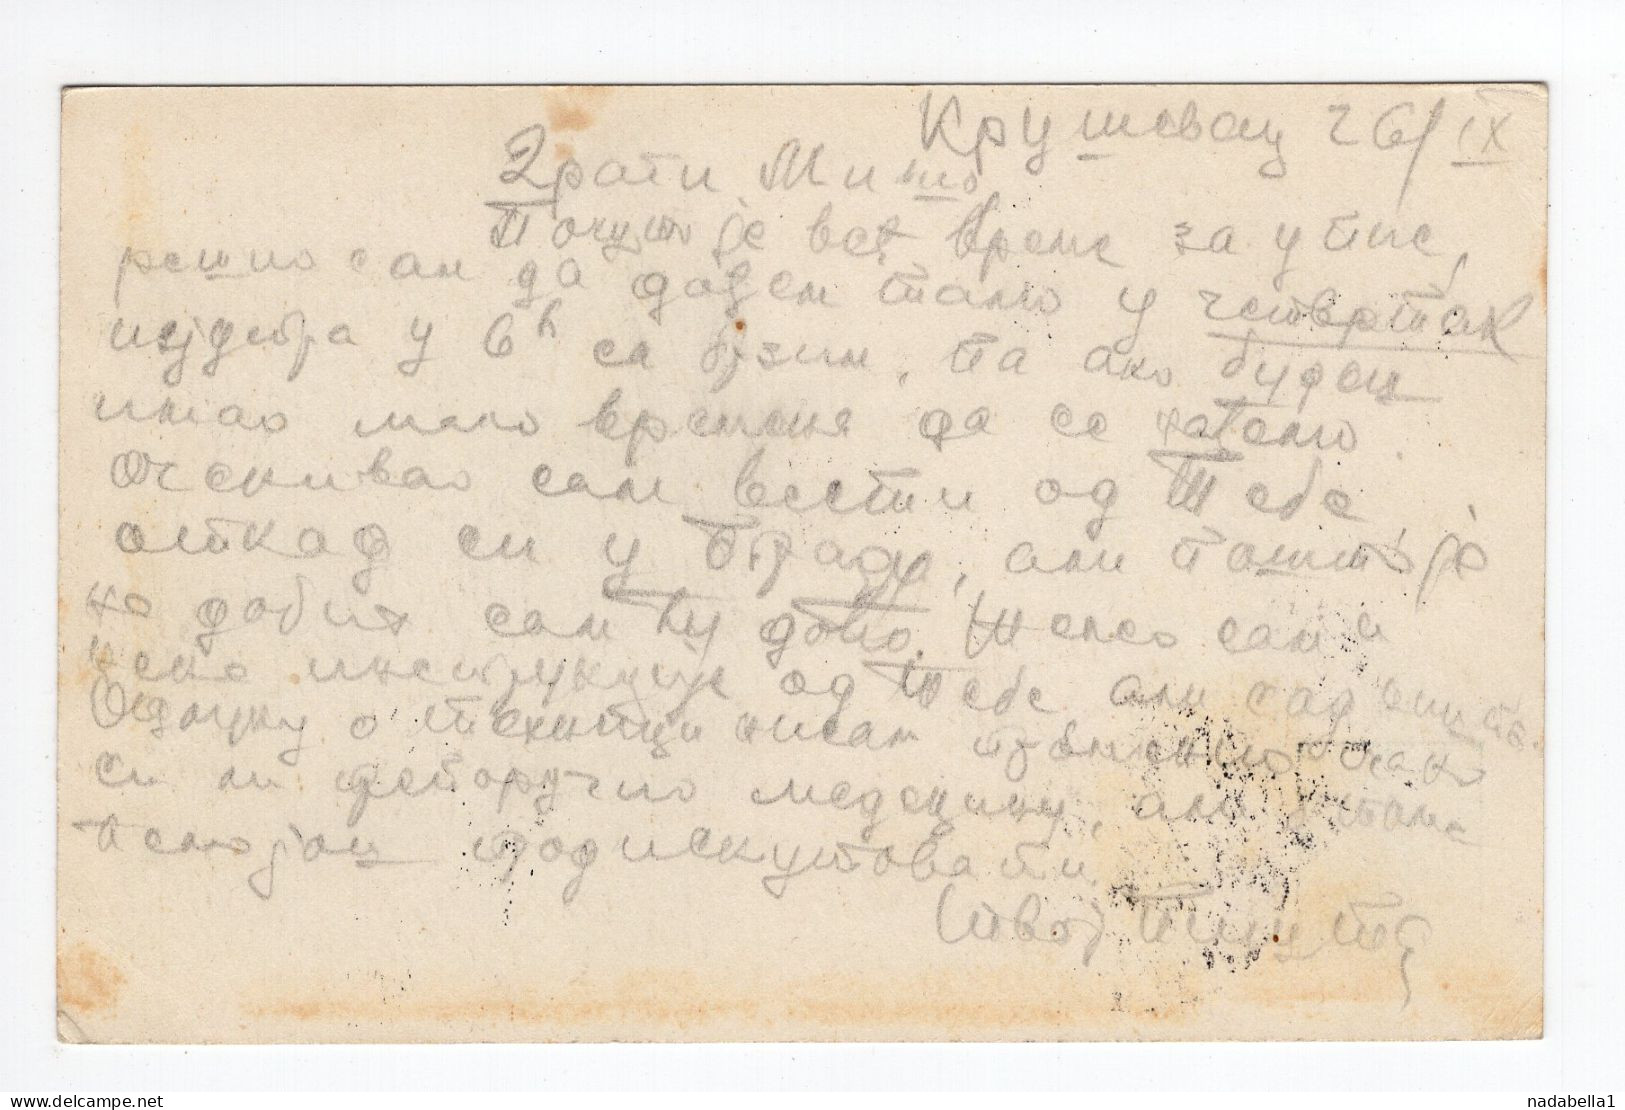 1938. KINGDOM OF YUGOSLAVIA,SERBIA,KRUSEVAC,MAGLIC TOWN ON IBAR RIVER ILLUSTRATED STATIONERY CARD,USED TO BELGRADE - Enteros Postales